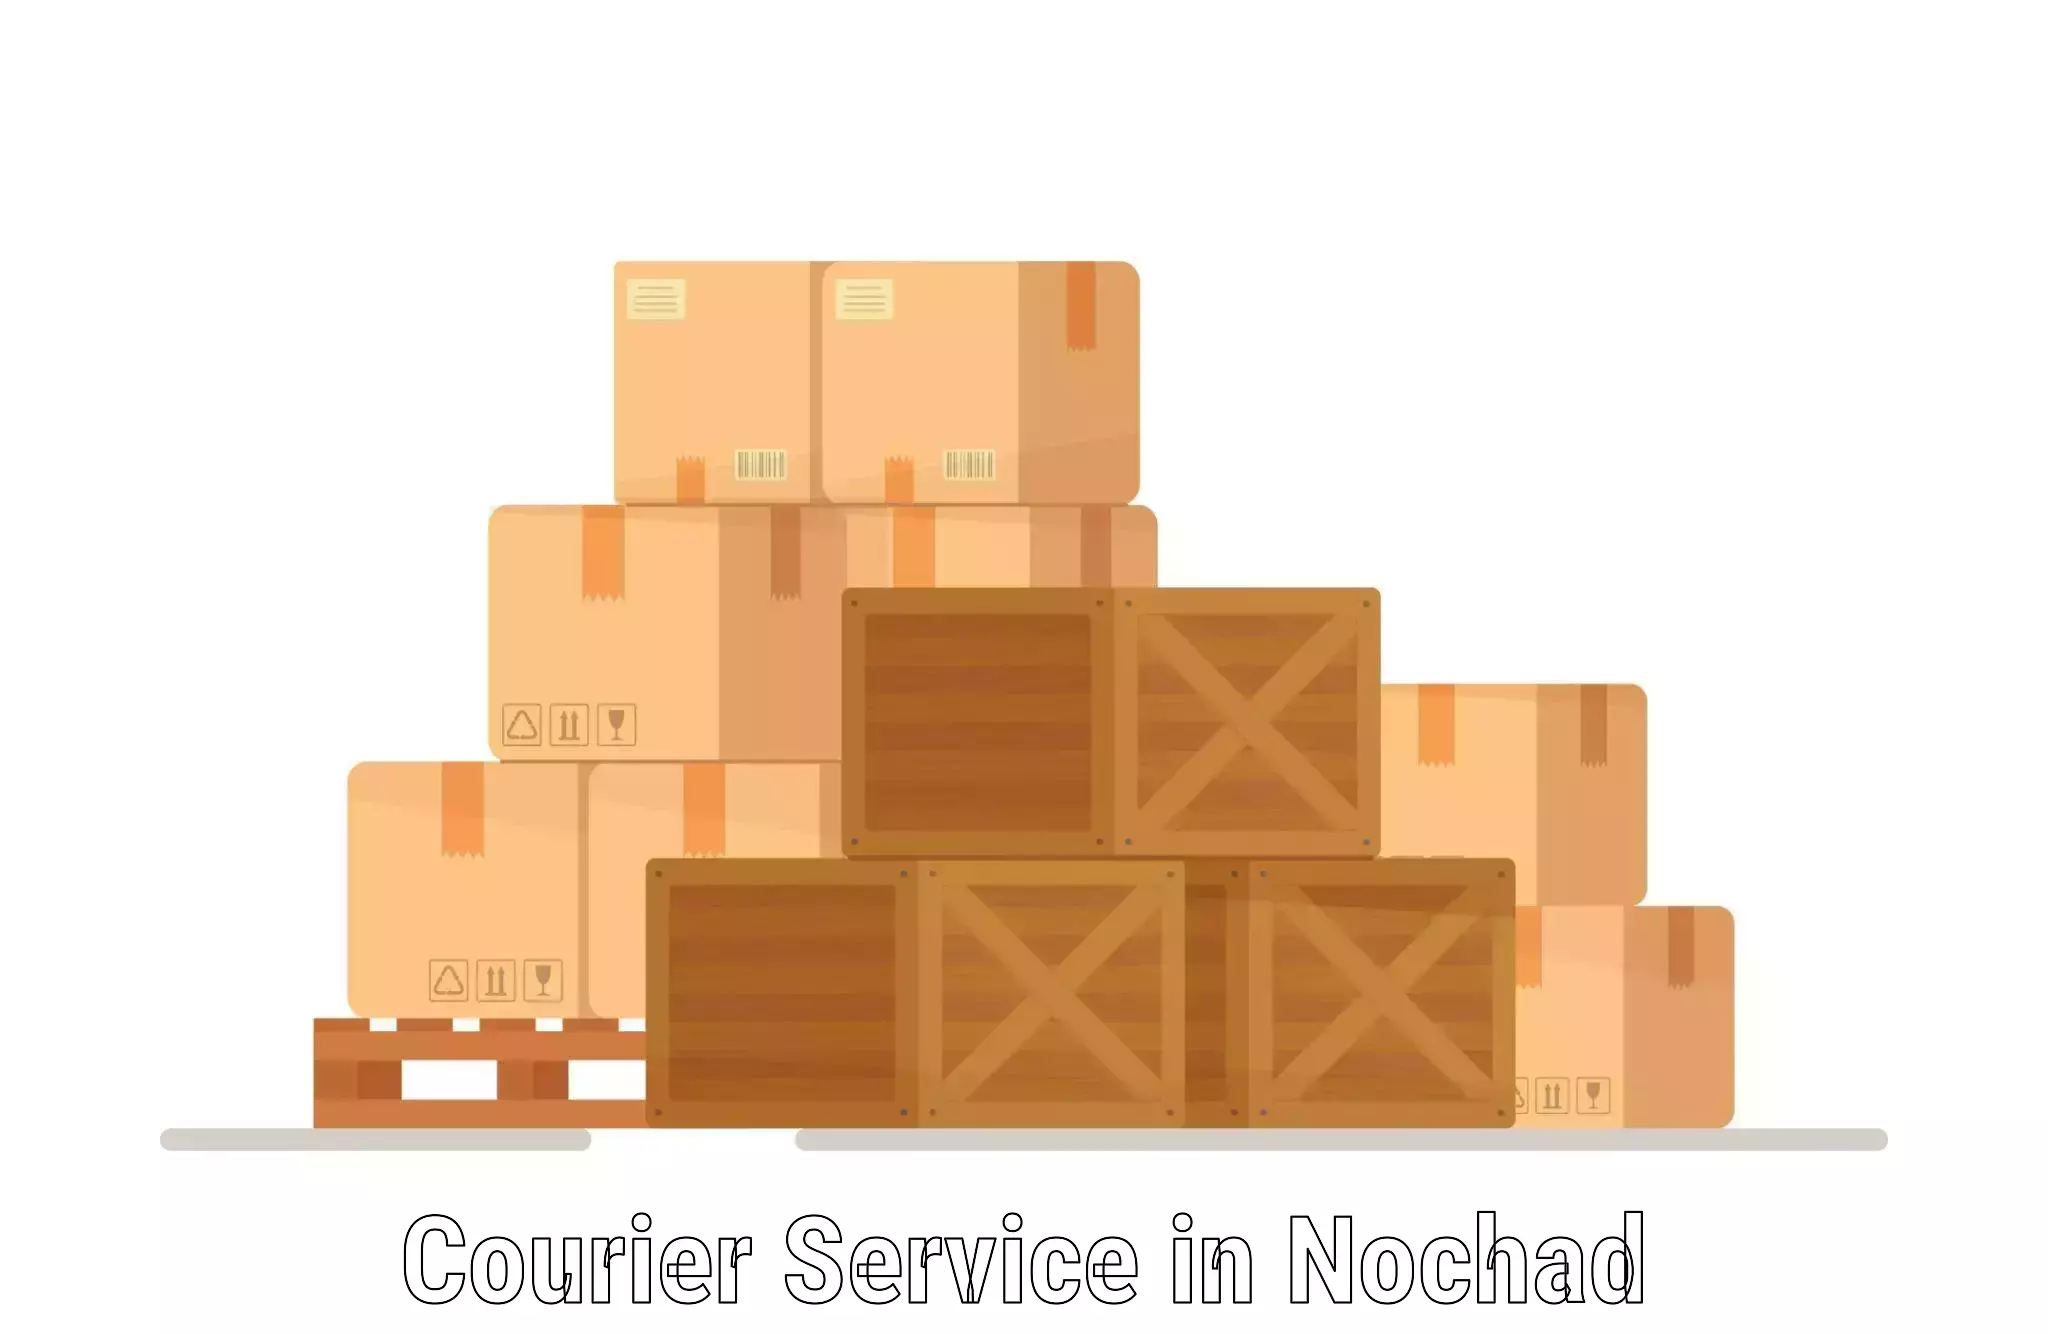 Lightweight parcel options in Nochad